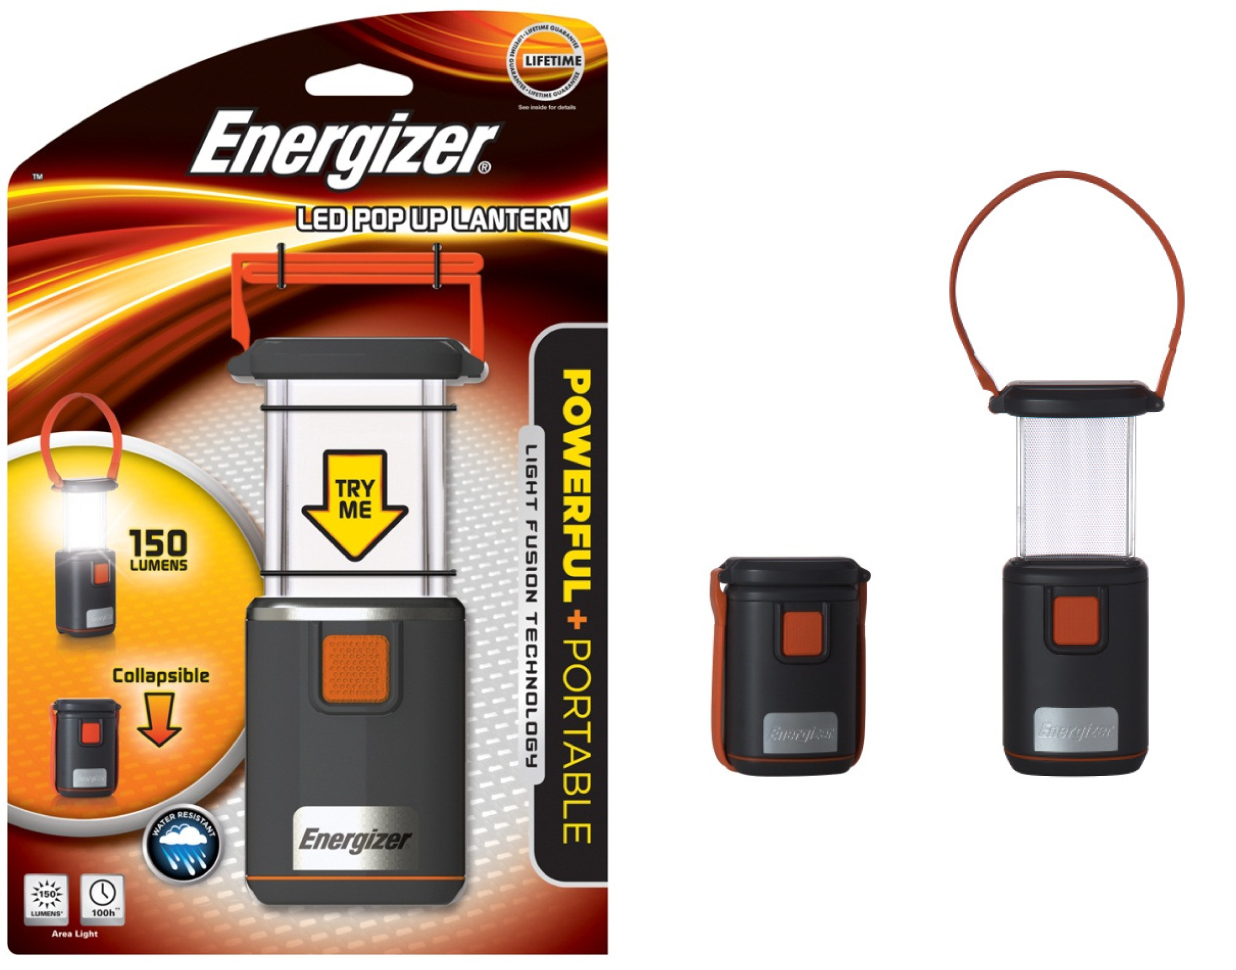 Energizer Pop-Up LED Lantern w/ Light Fusion Technology - 150 Lumens -  Polypropylene - 4 x AA Batteries